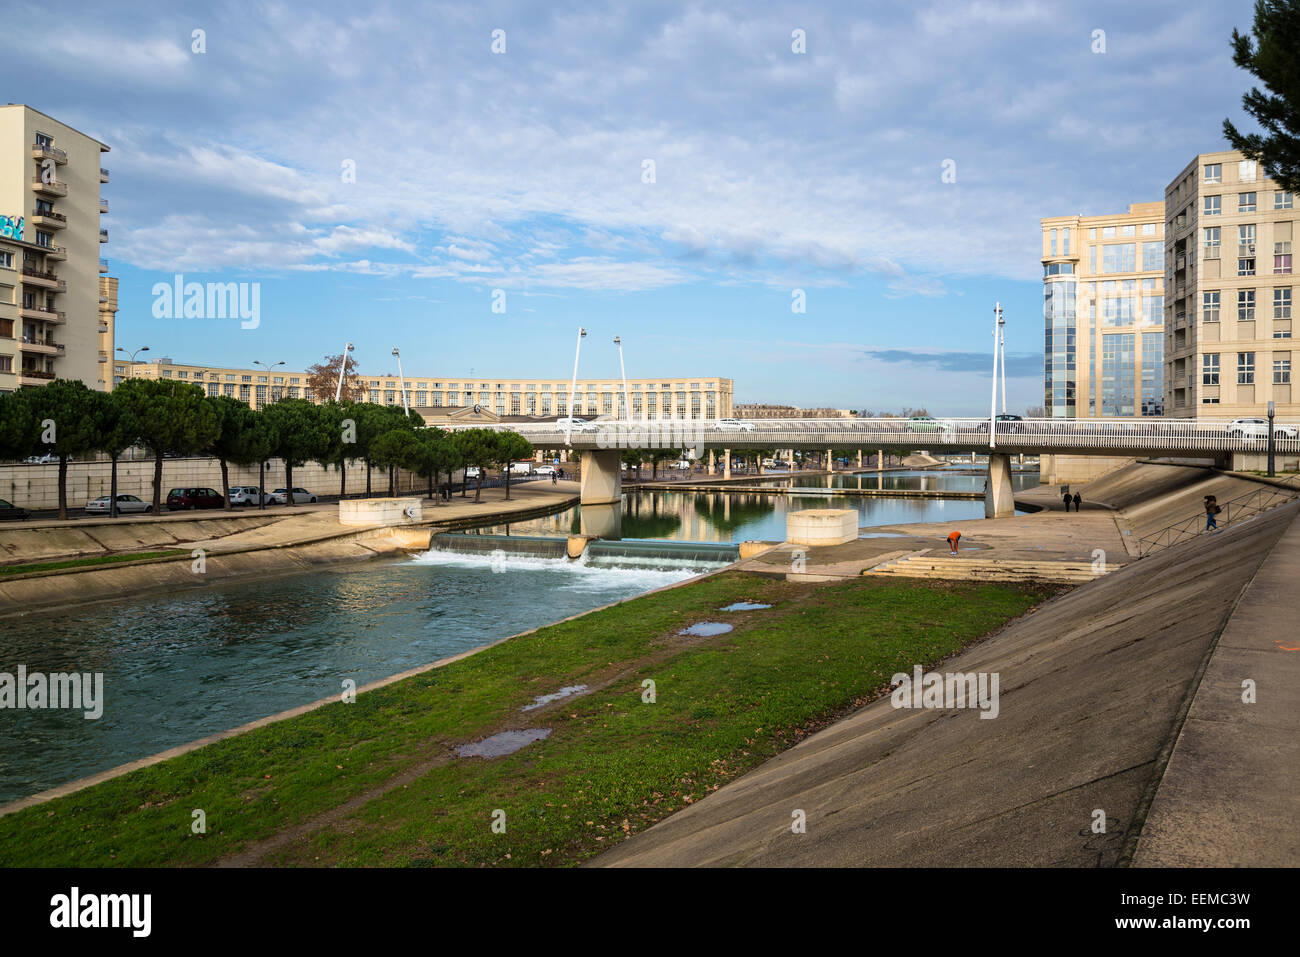 Bridge over river Lez and new urban development, Montpellier, France Stock Photo